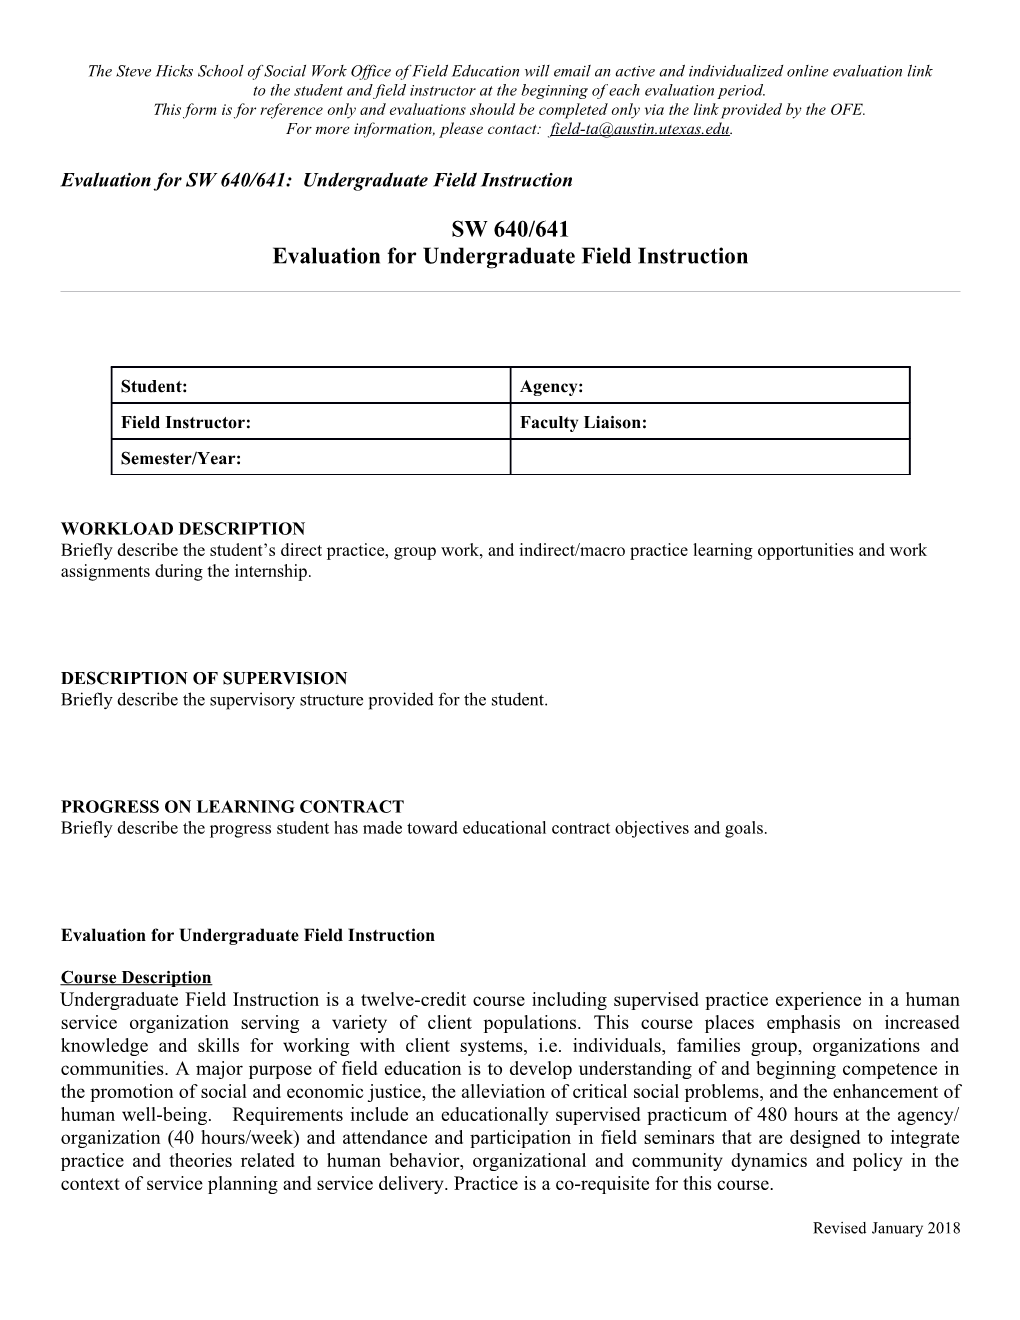 Evaluation for SW 640/641: Undergraduate Field Instruction